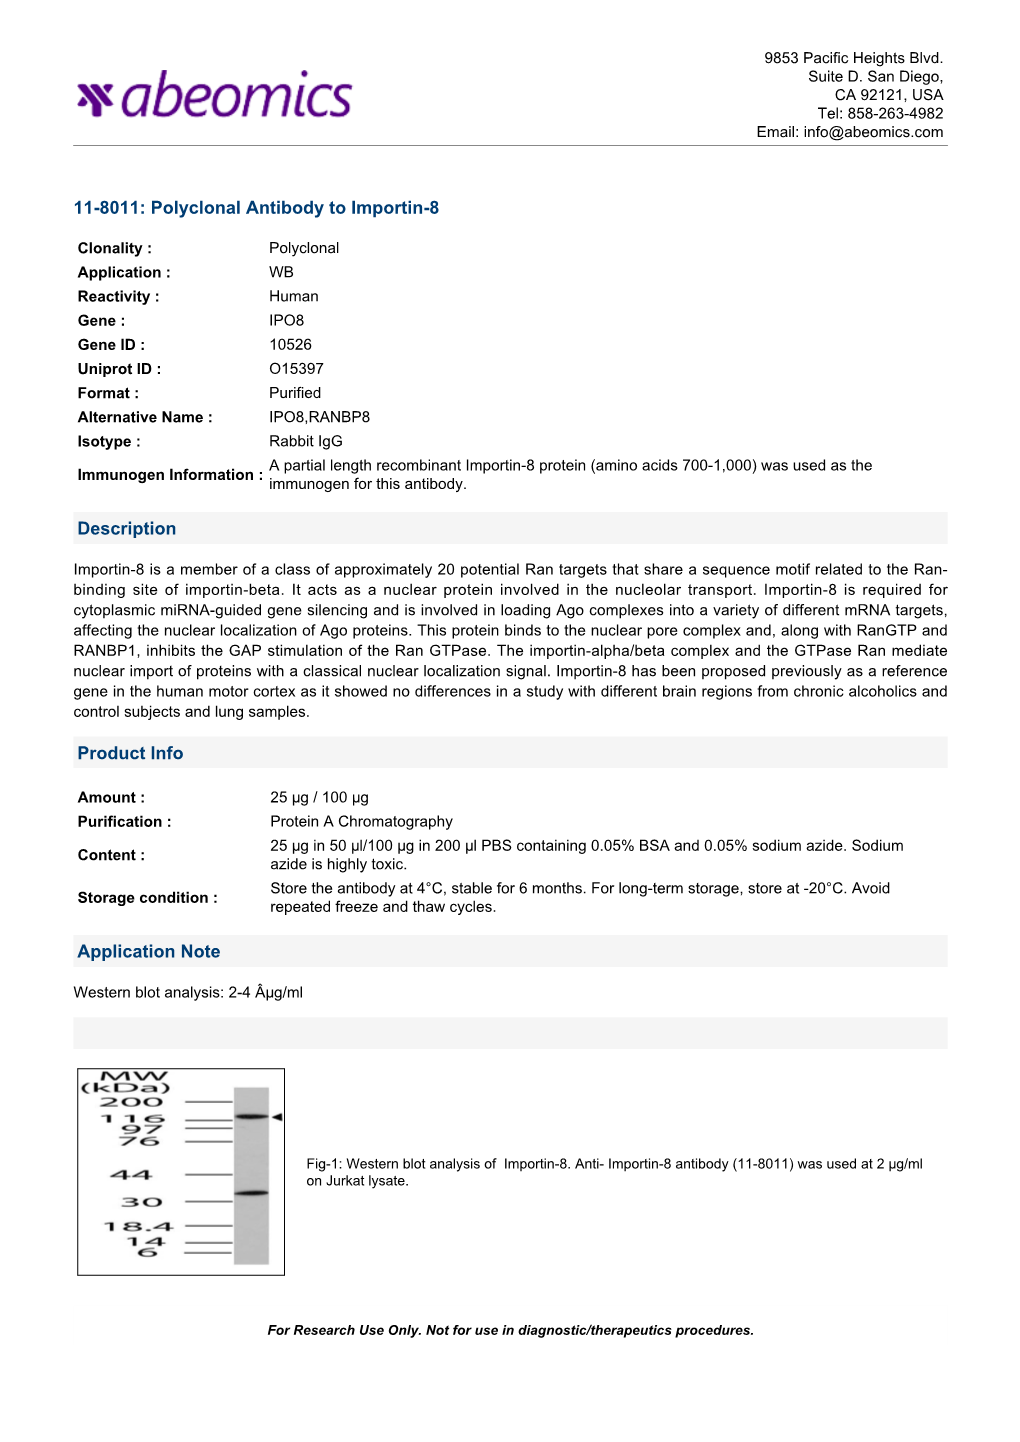 Polyclonal Antibody to Importin-8 Description Product Info